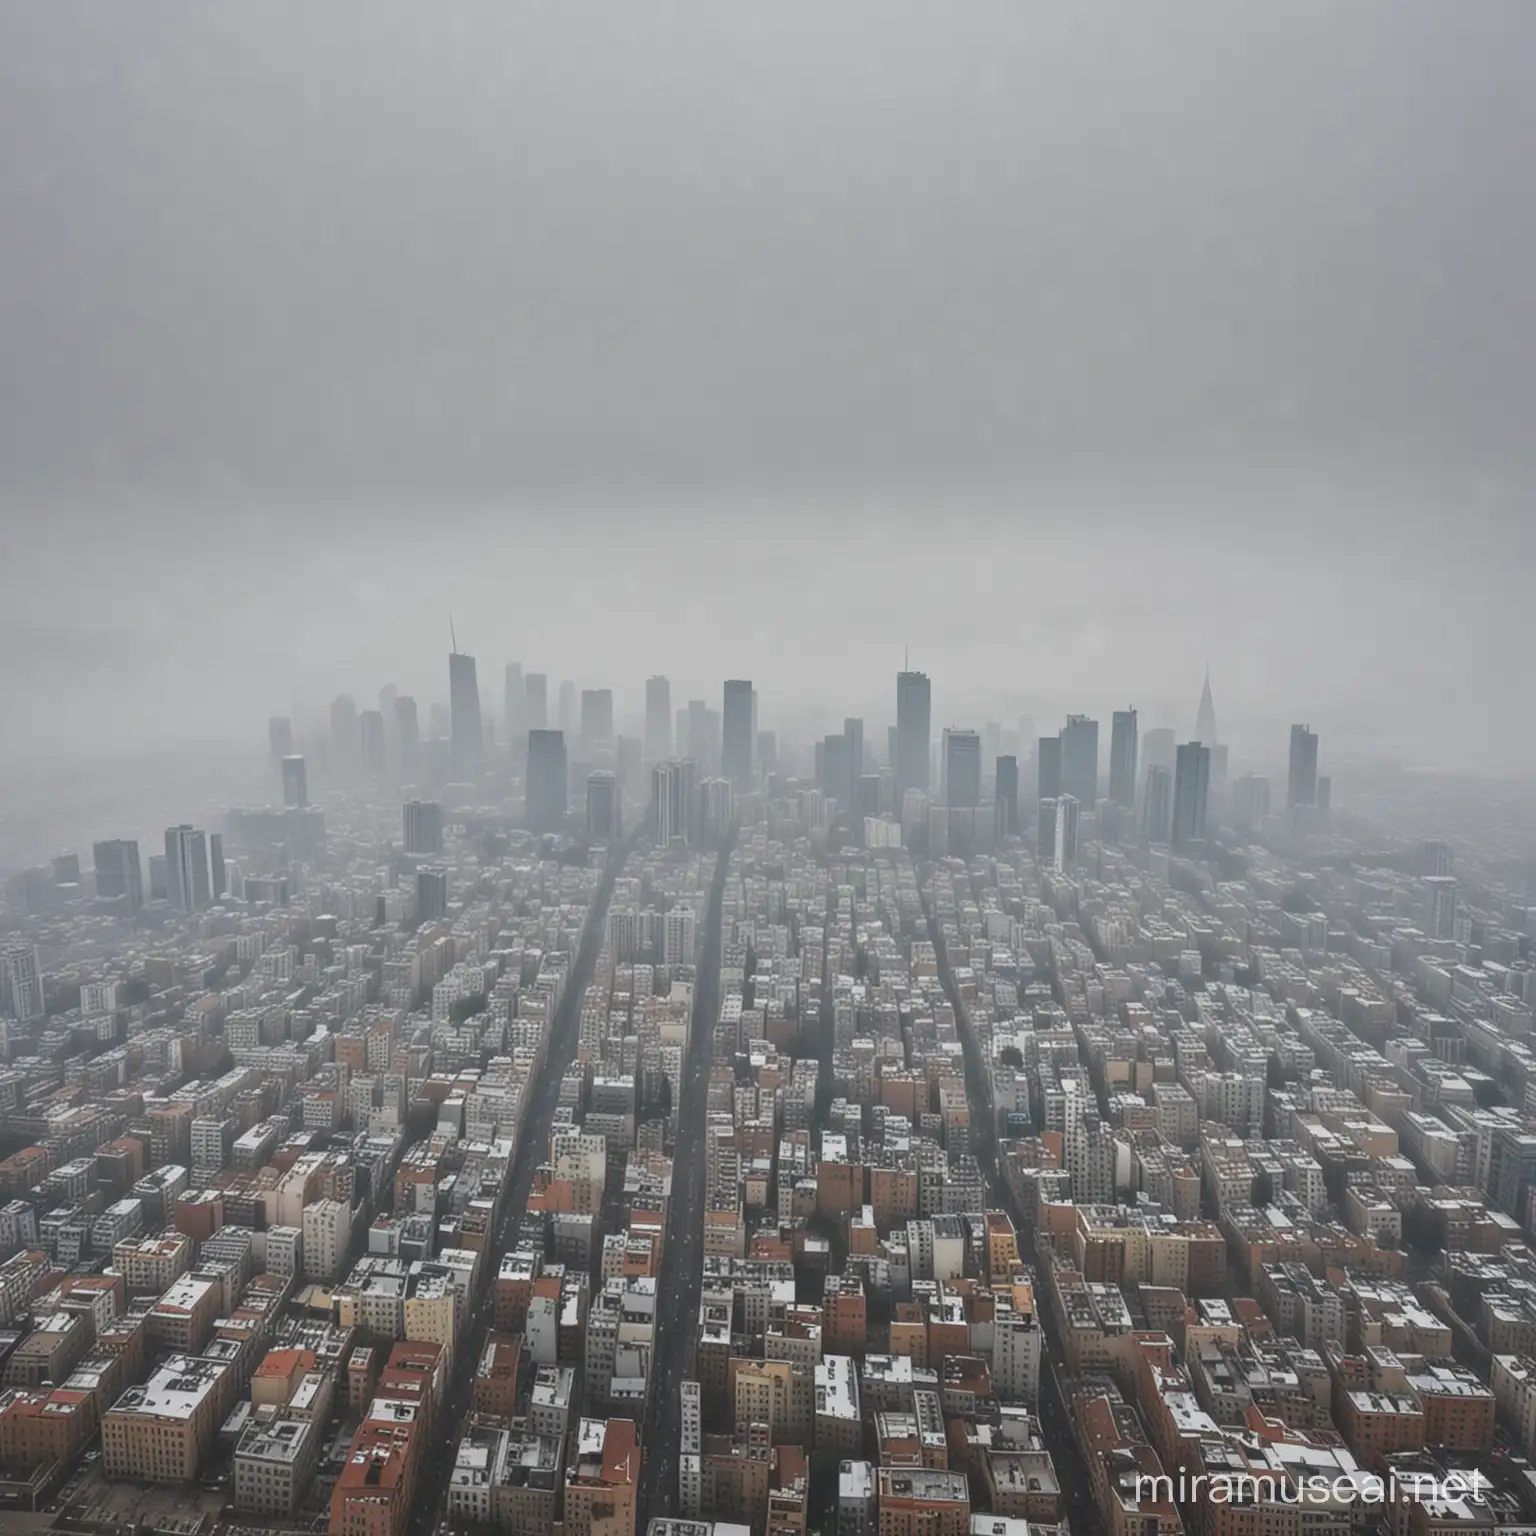 Misty Urban Landscape City Enveloped in Fog